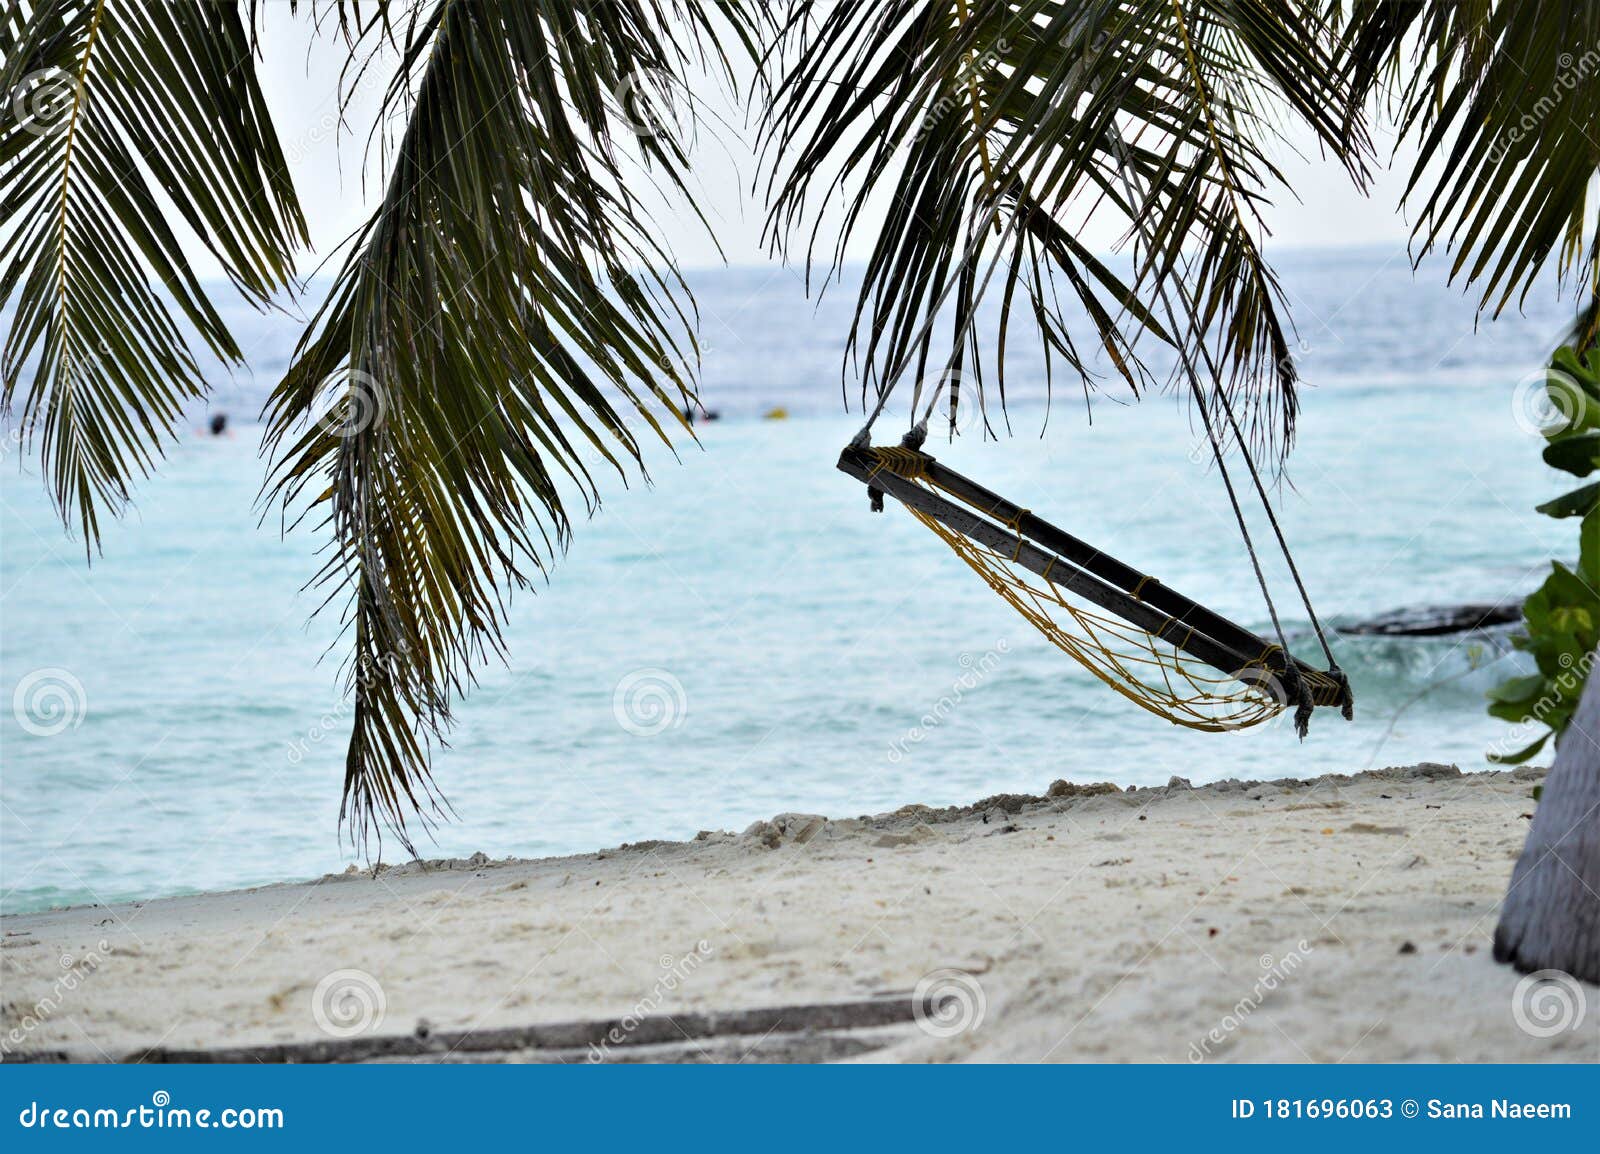 Maldives, Beautiful View Of Hammock Hanging On The Palm Tree S 